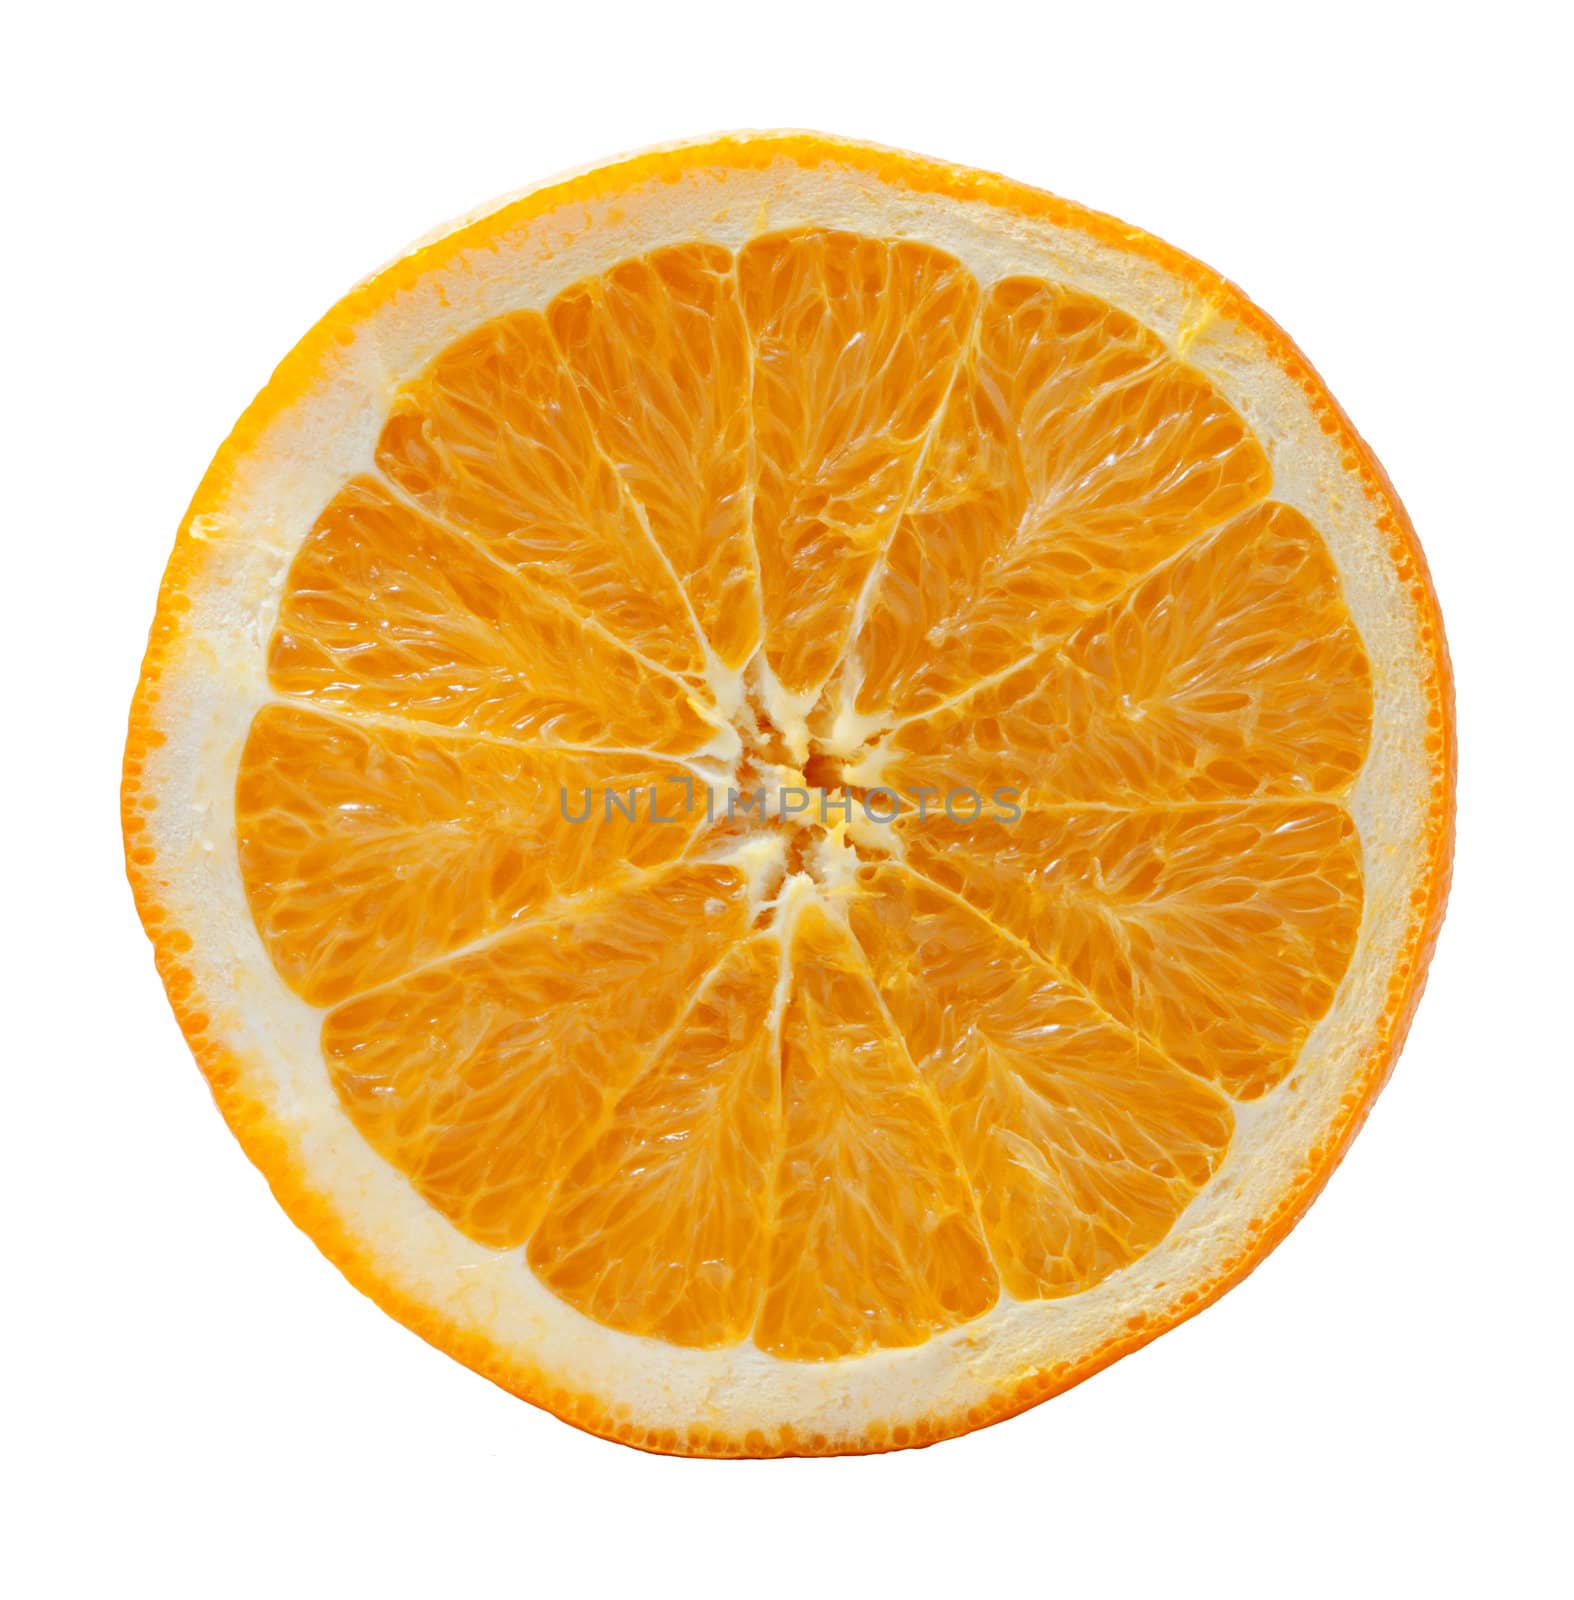 The slice of orange isolated on the white backgroud.